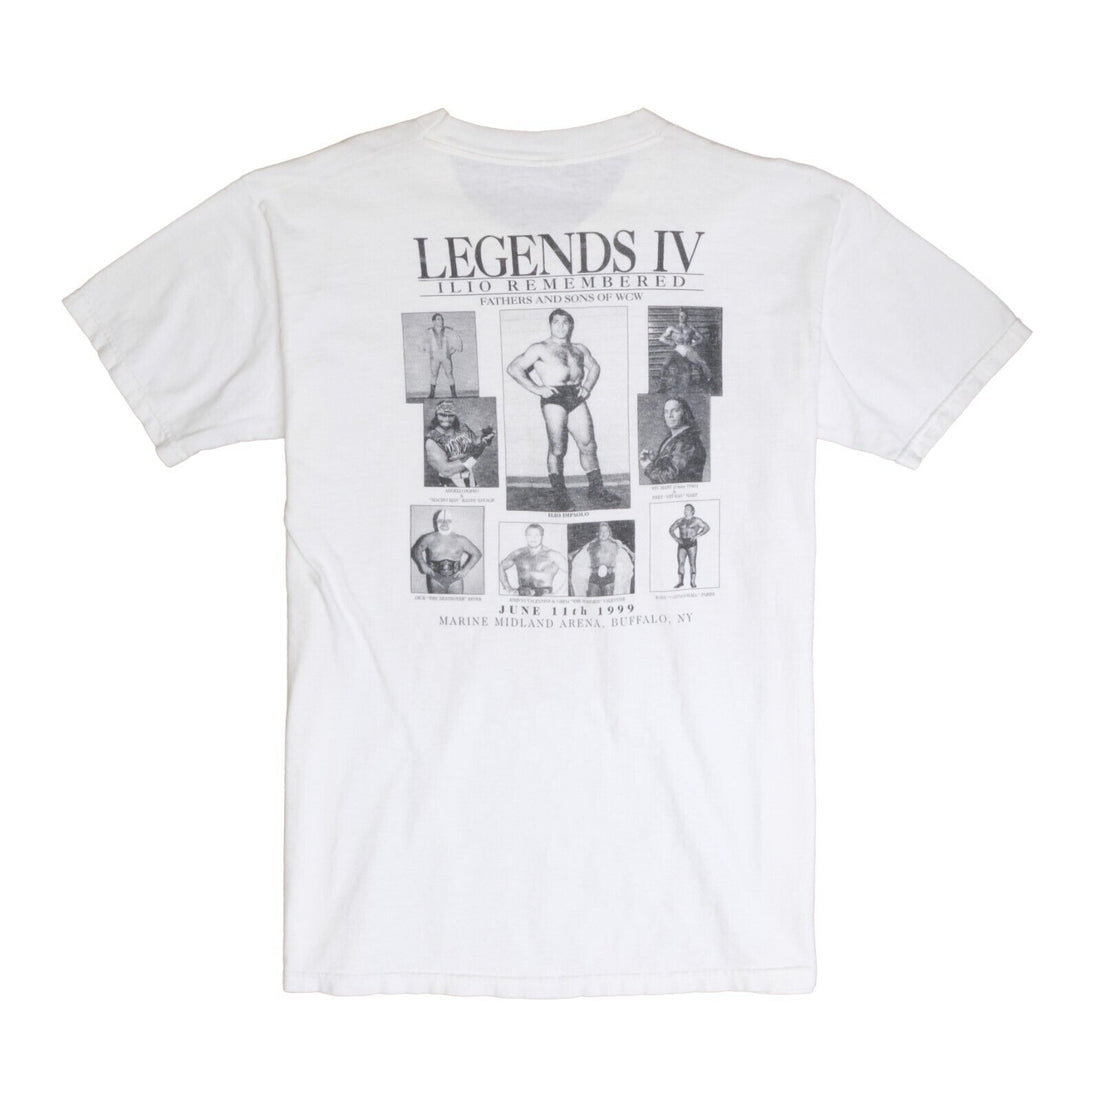 Vintage Legends IV Ilio Remembered Wrestling T-Shirt Size Medium White WCW